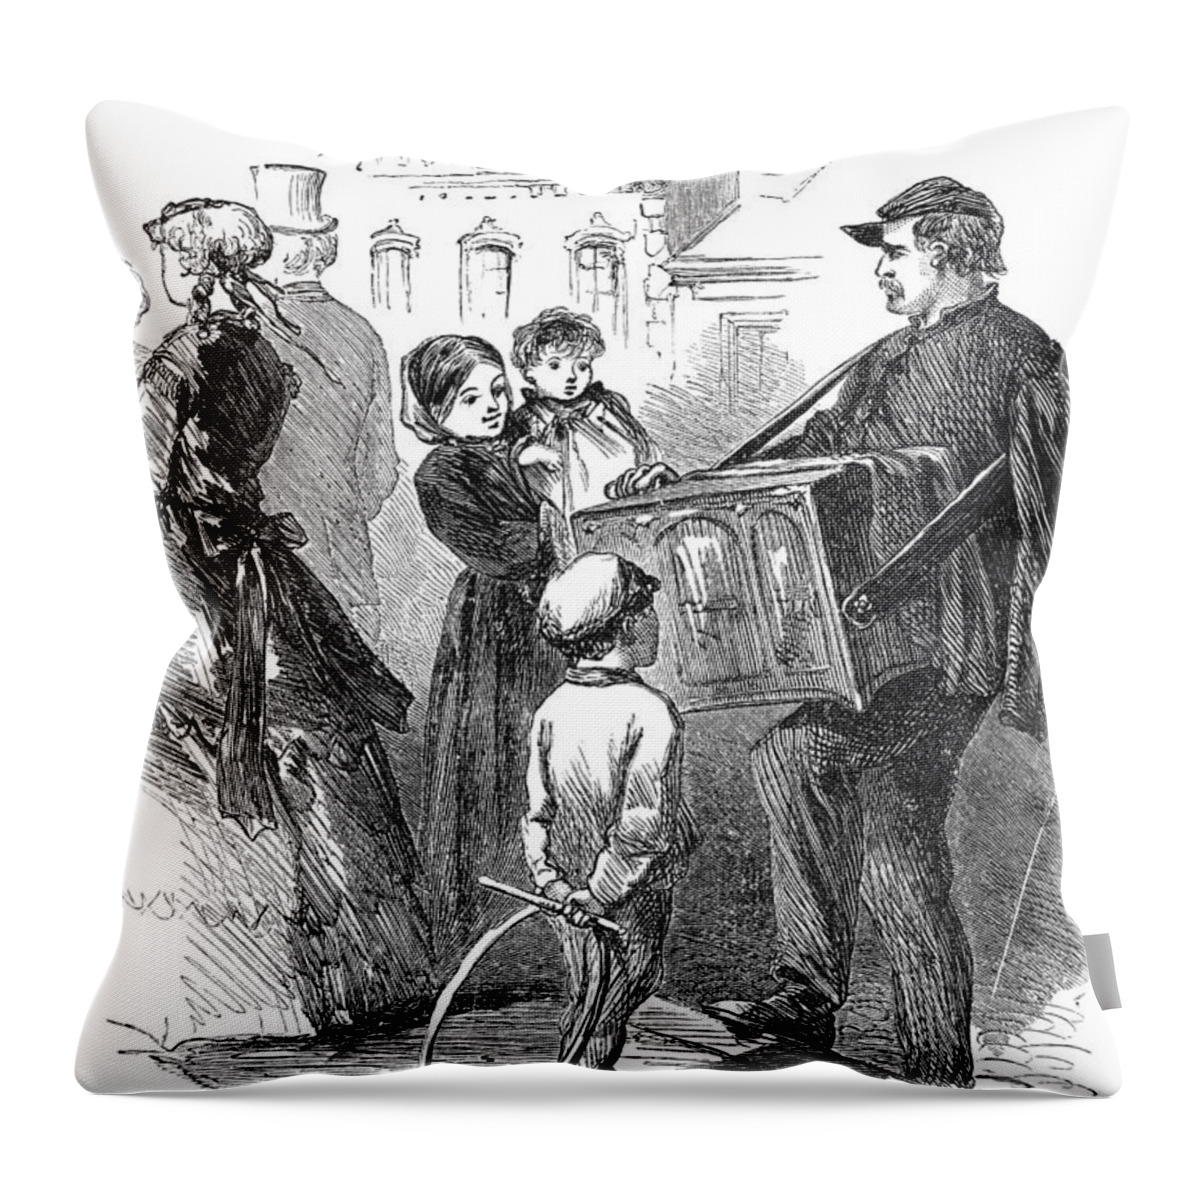 1868 Throw Pillow featuring the photograph Street Musician, 1868 by Granger